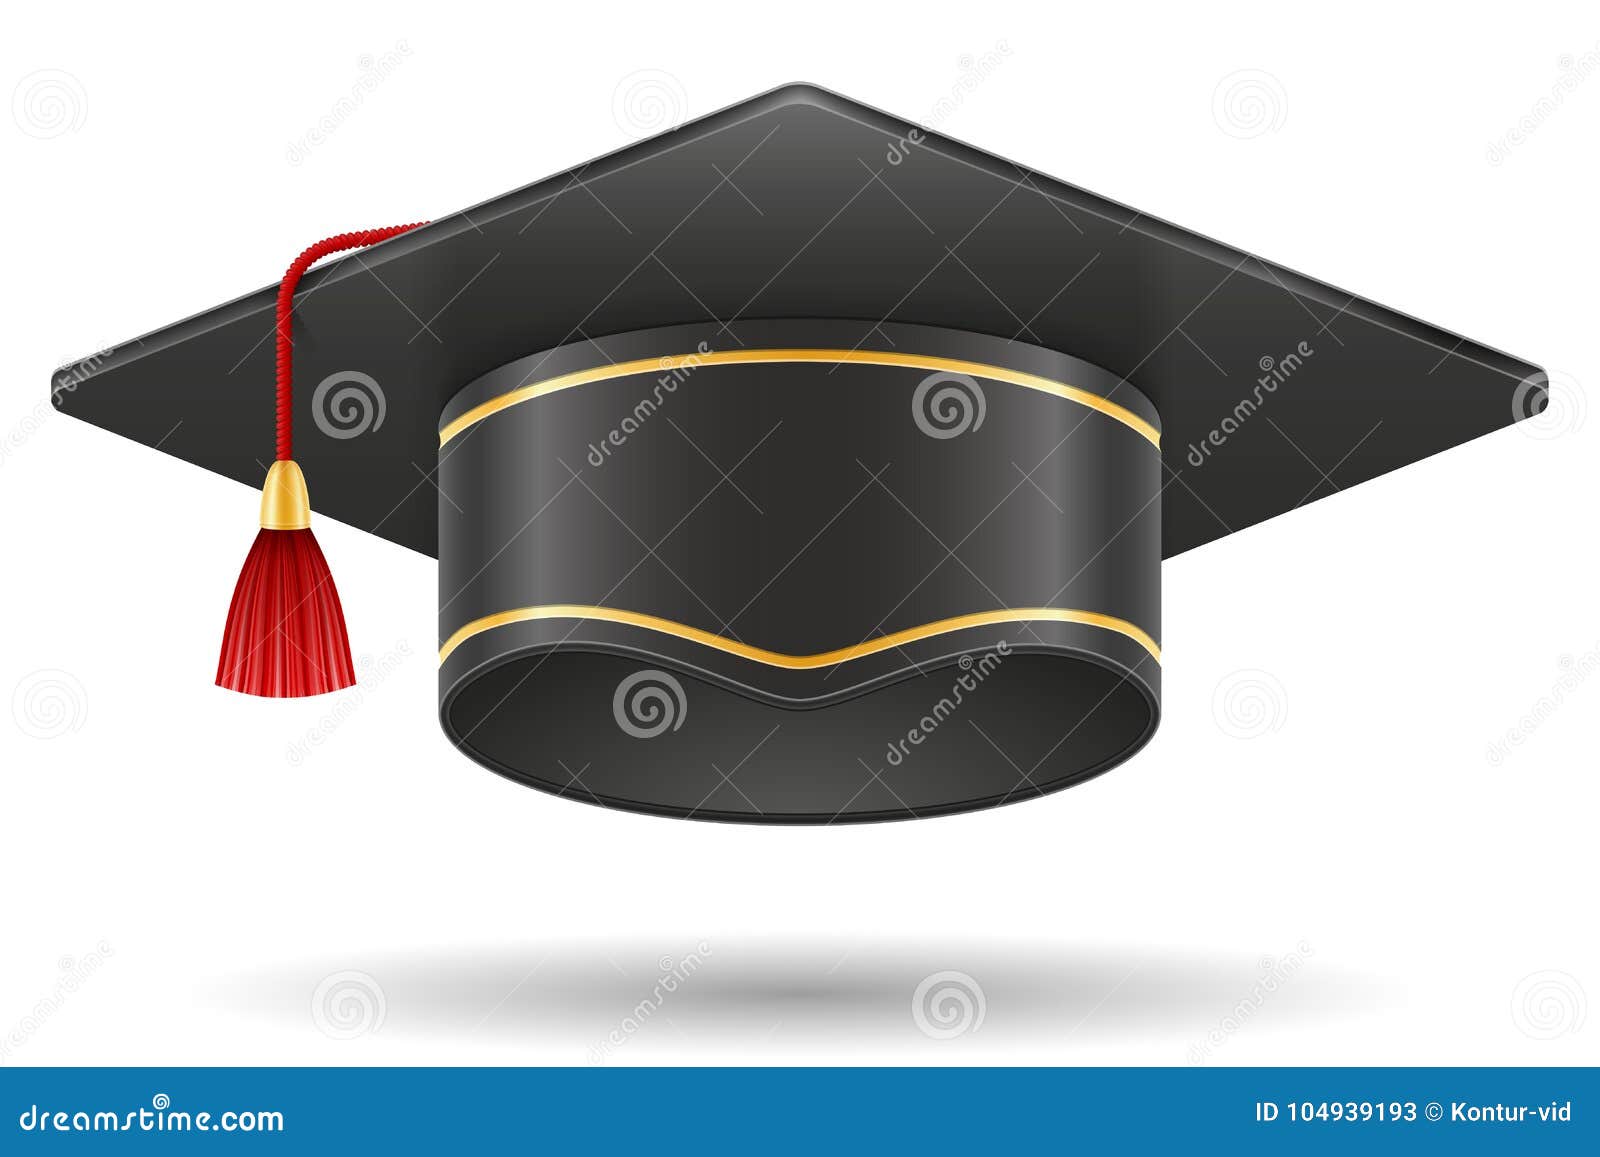 Academic Graduation Mortarboard Square Cap Vector Illustration Stock ...